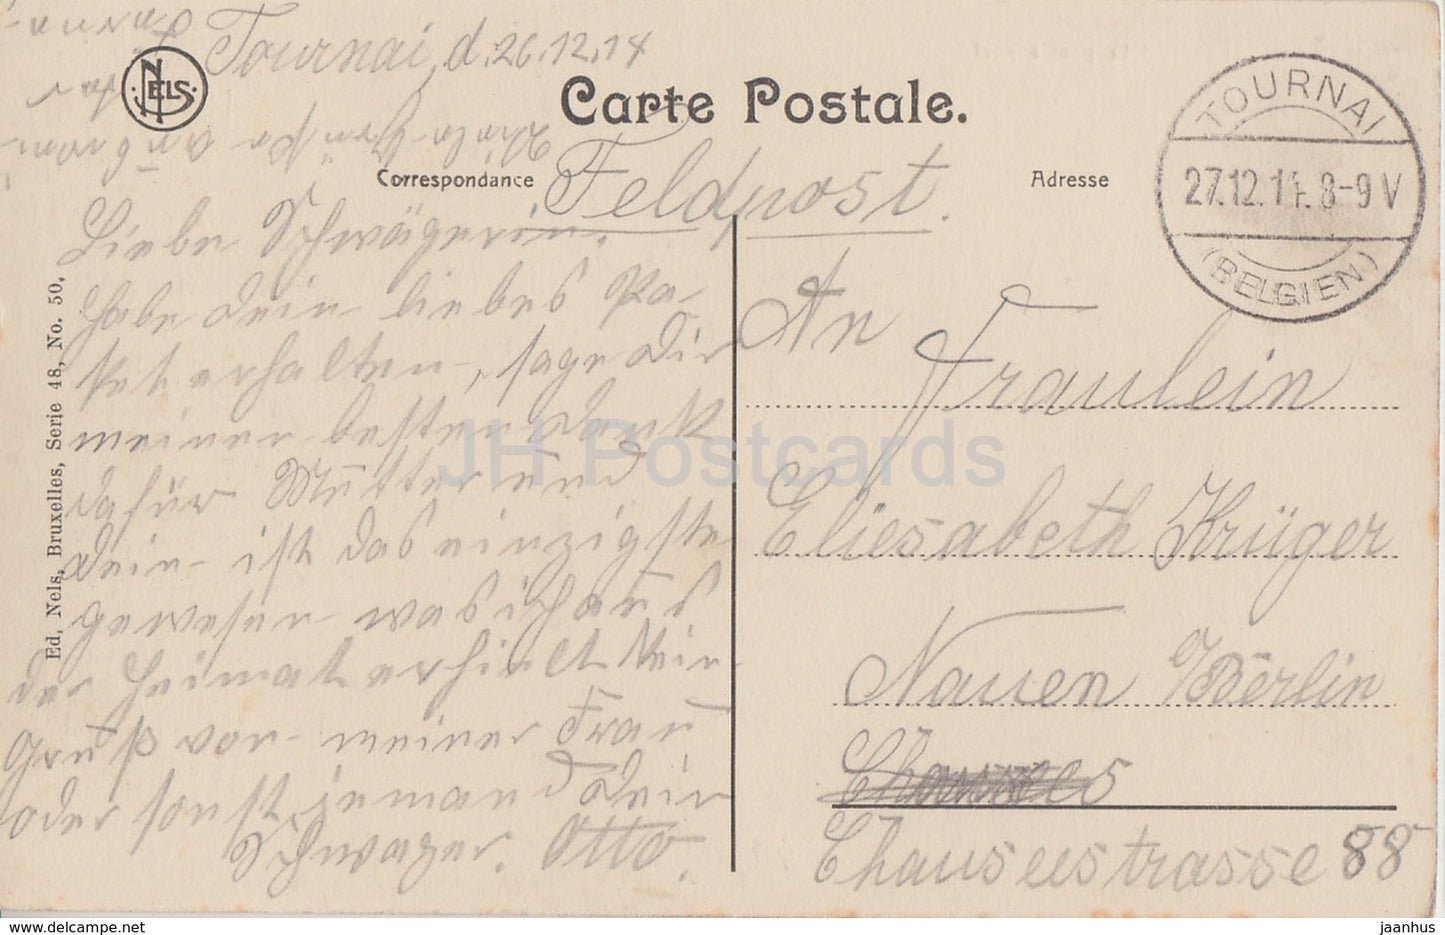 Tournai - Le Pont a Pont - bridge - Feldpost - old postcard - 1914 - Belgium - used